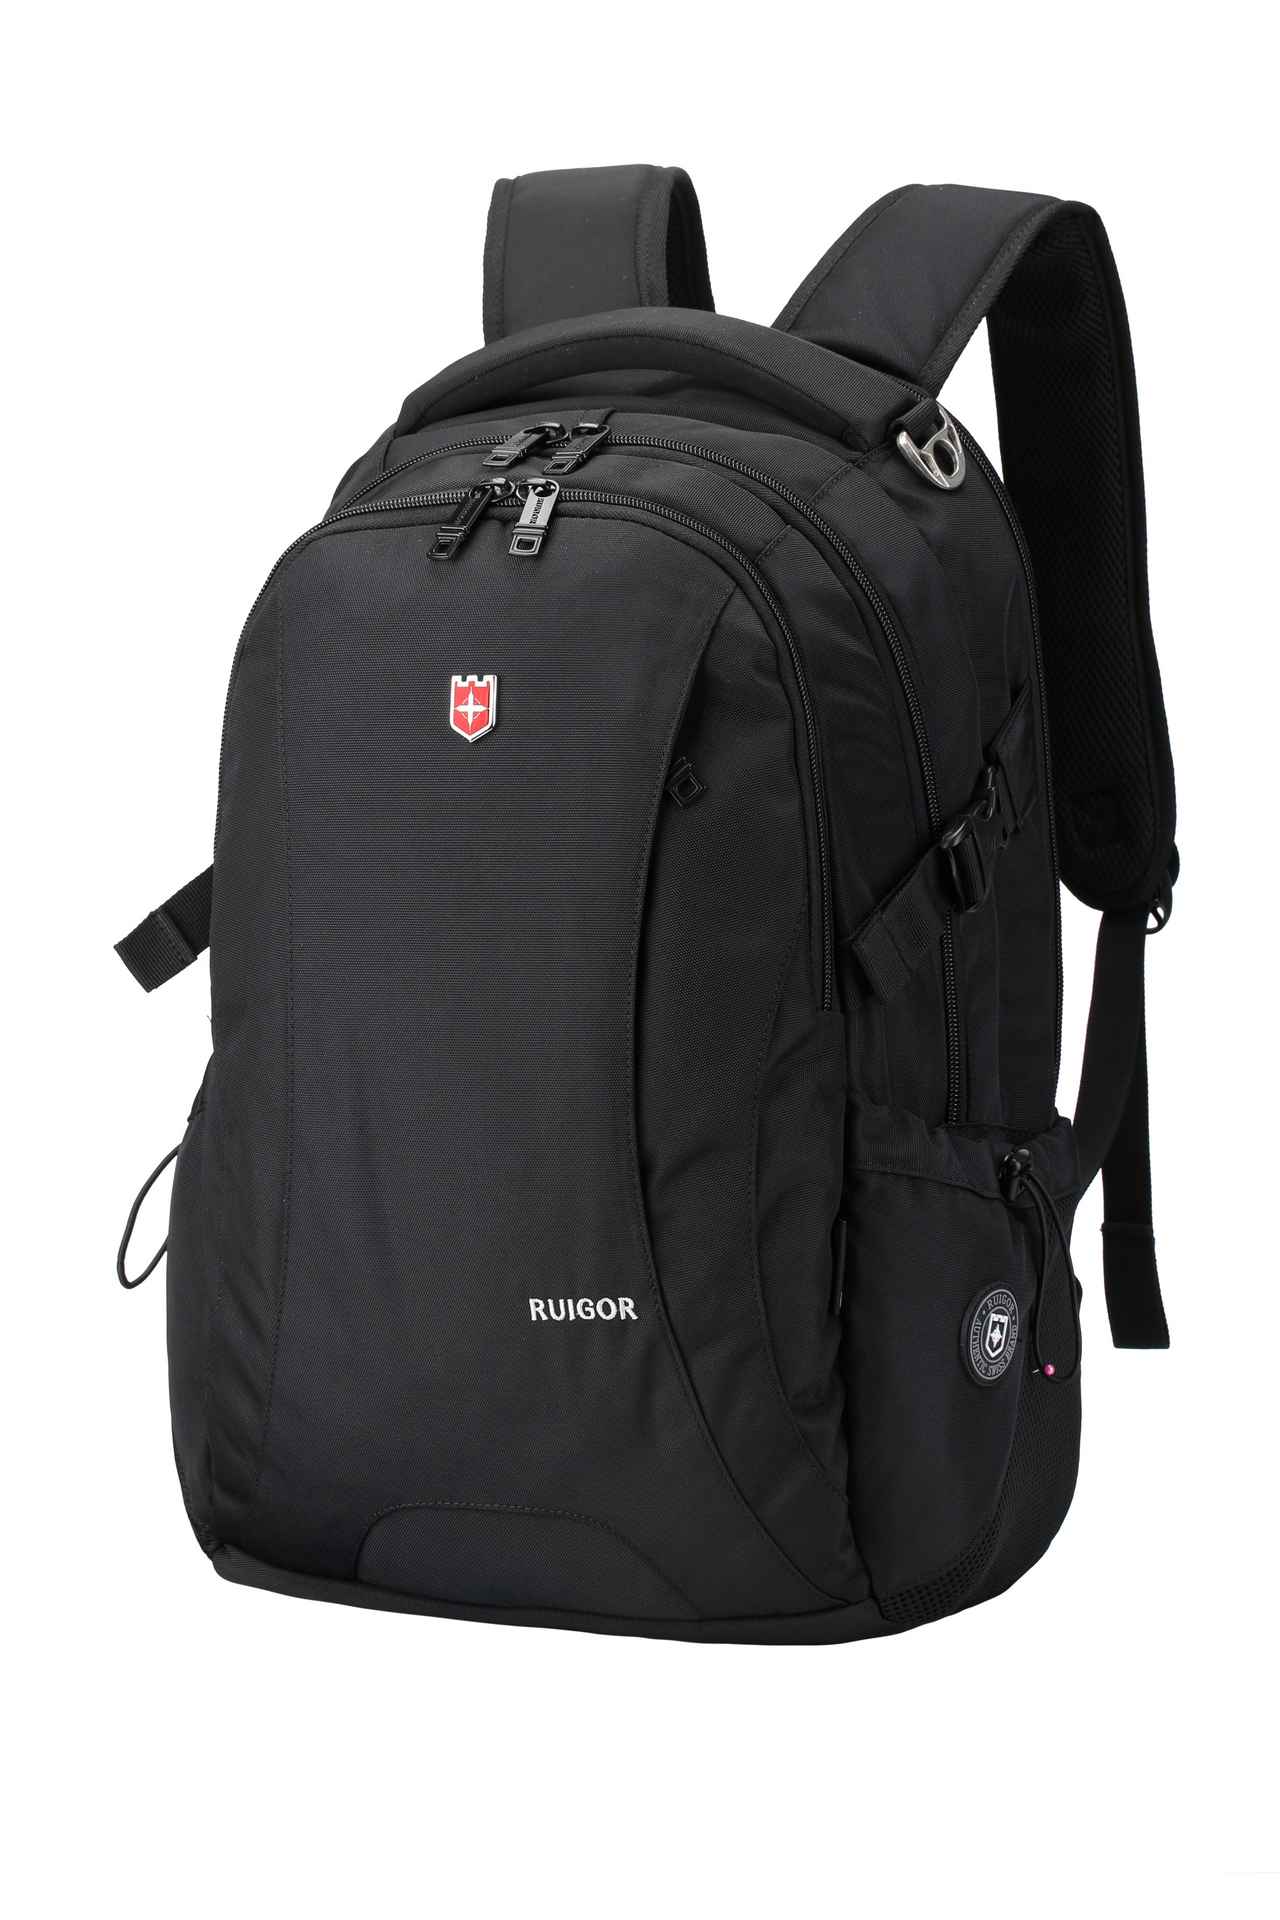 RUIGOR ICON 78 Laptop Backpack Black